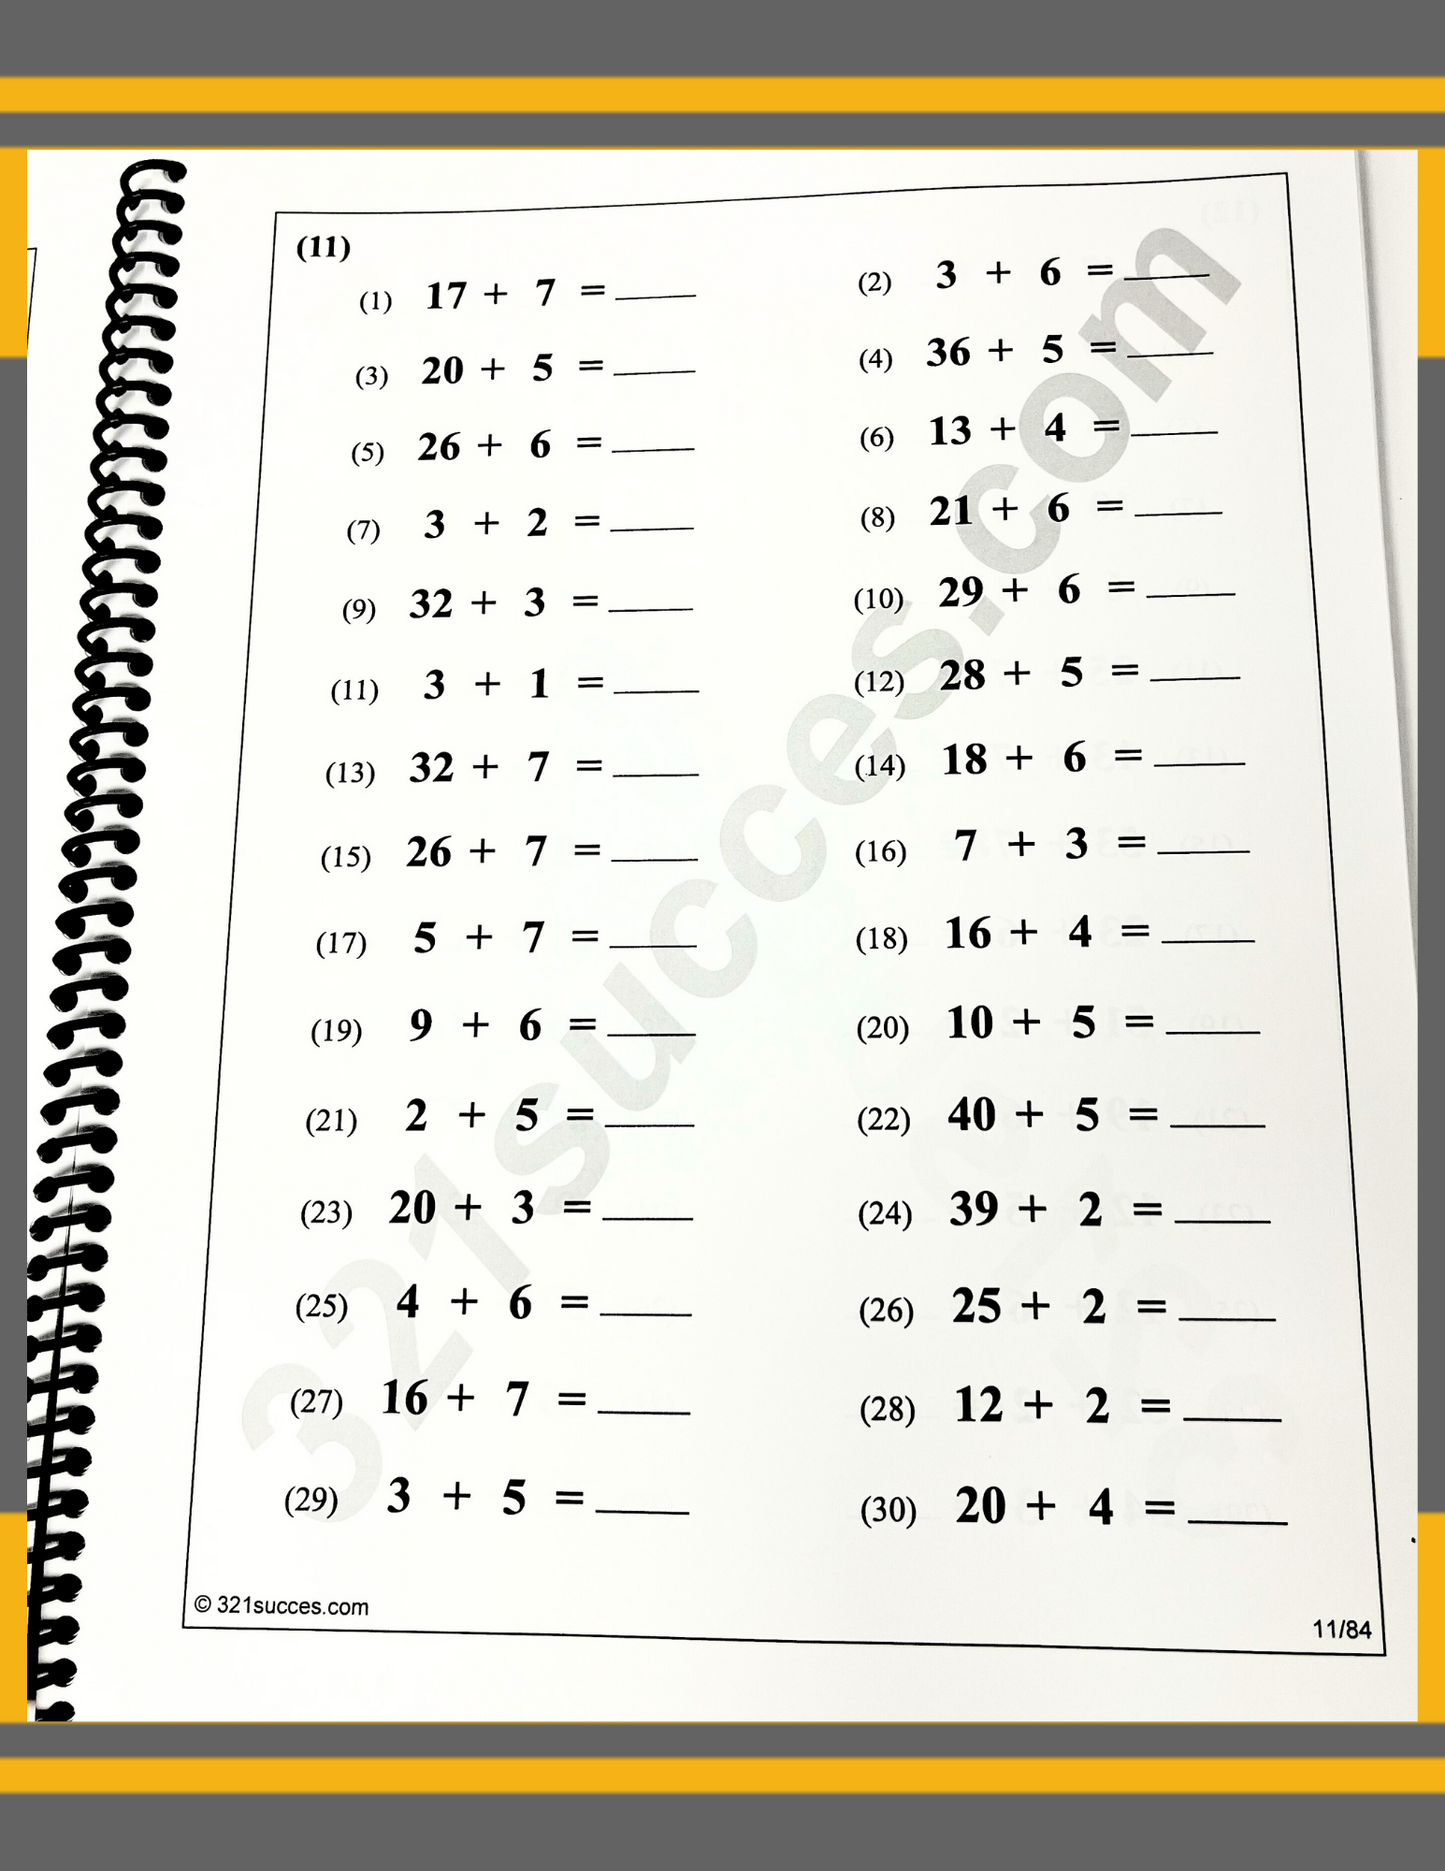 Additions et Soustractions - Cahier d'exercices - Format papier 8,5 x 11 po.